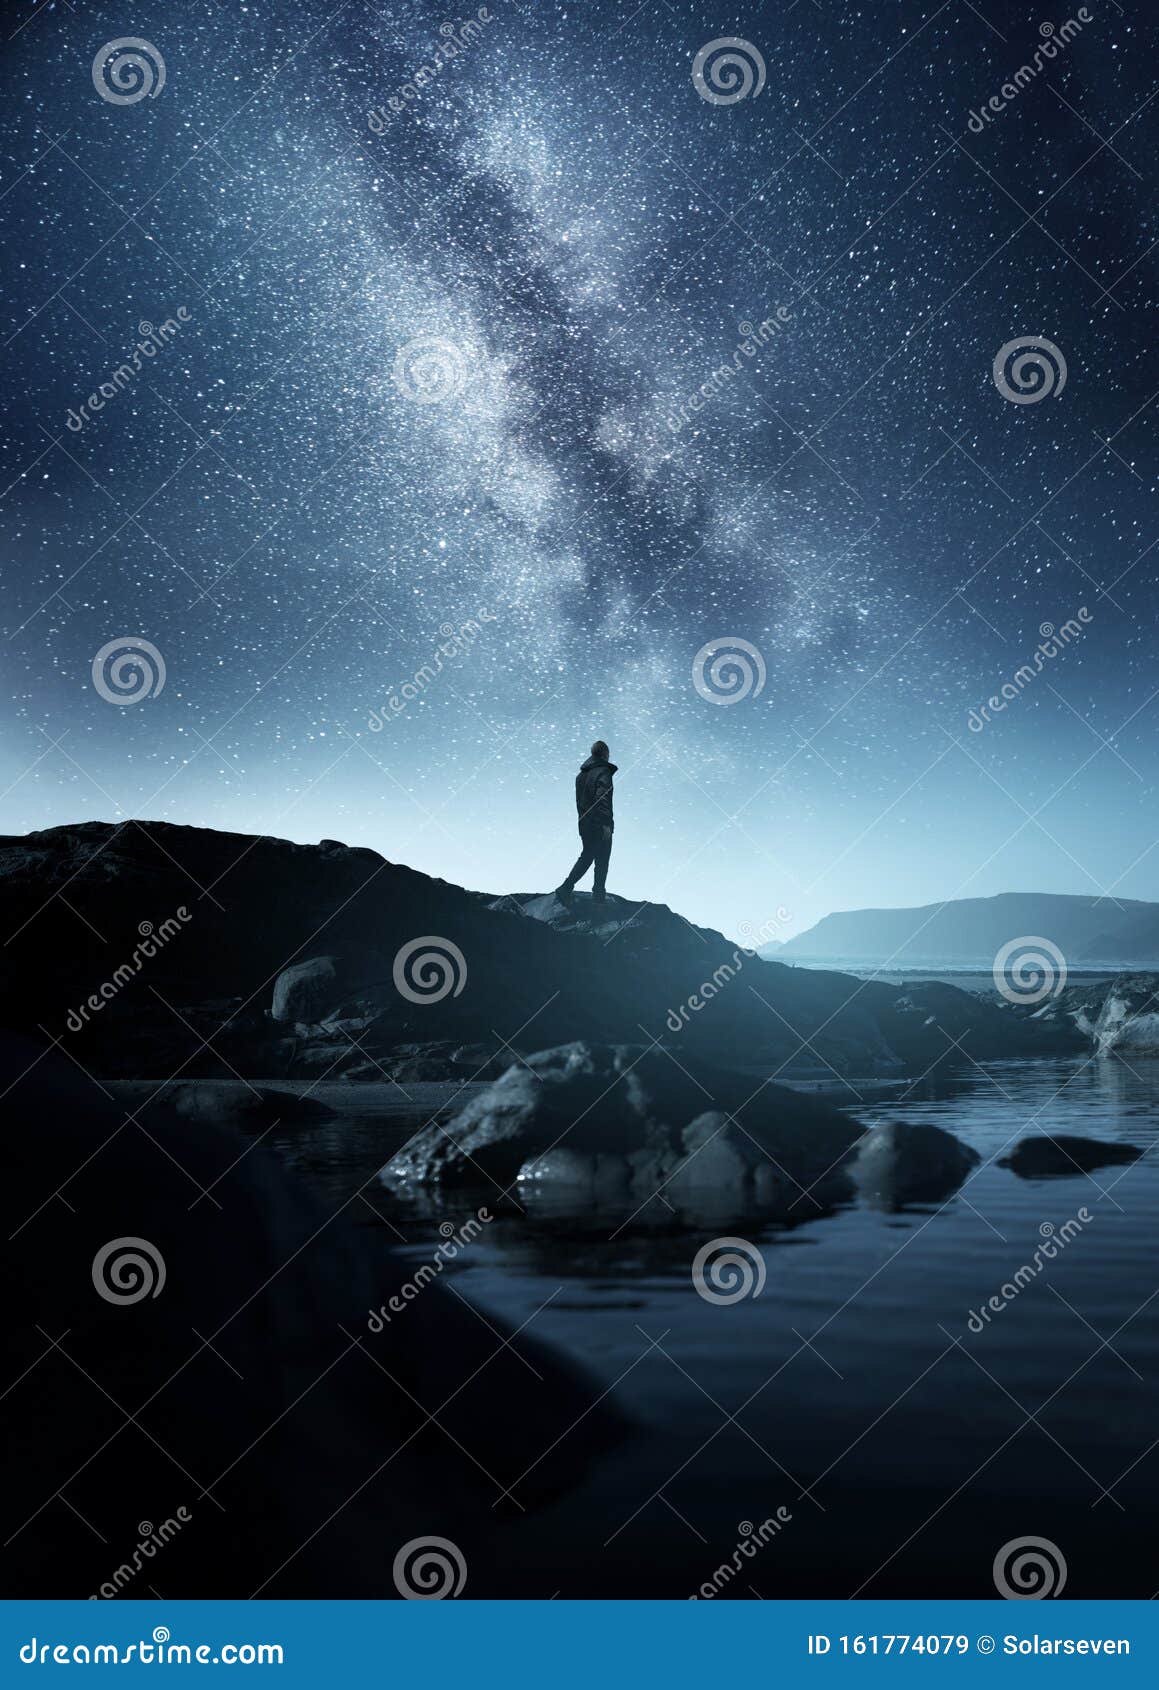 a man watching the night sky